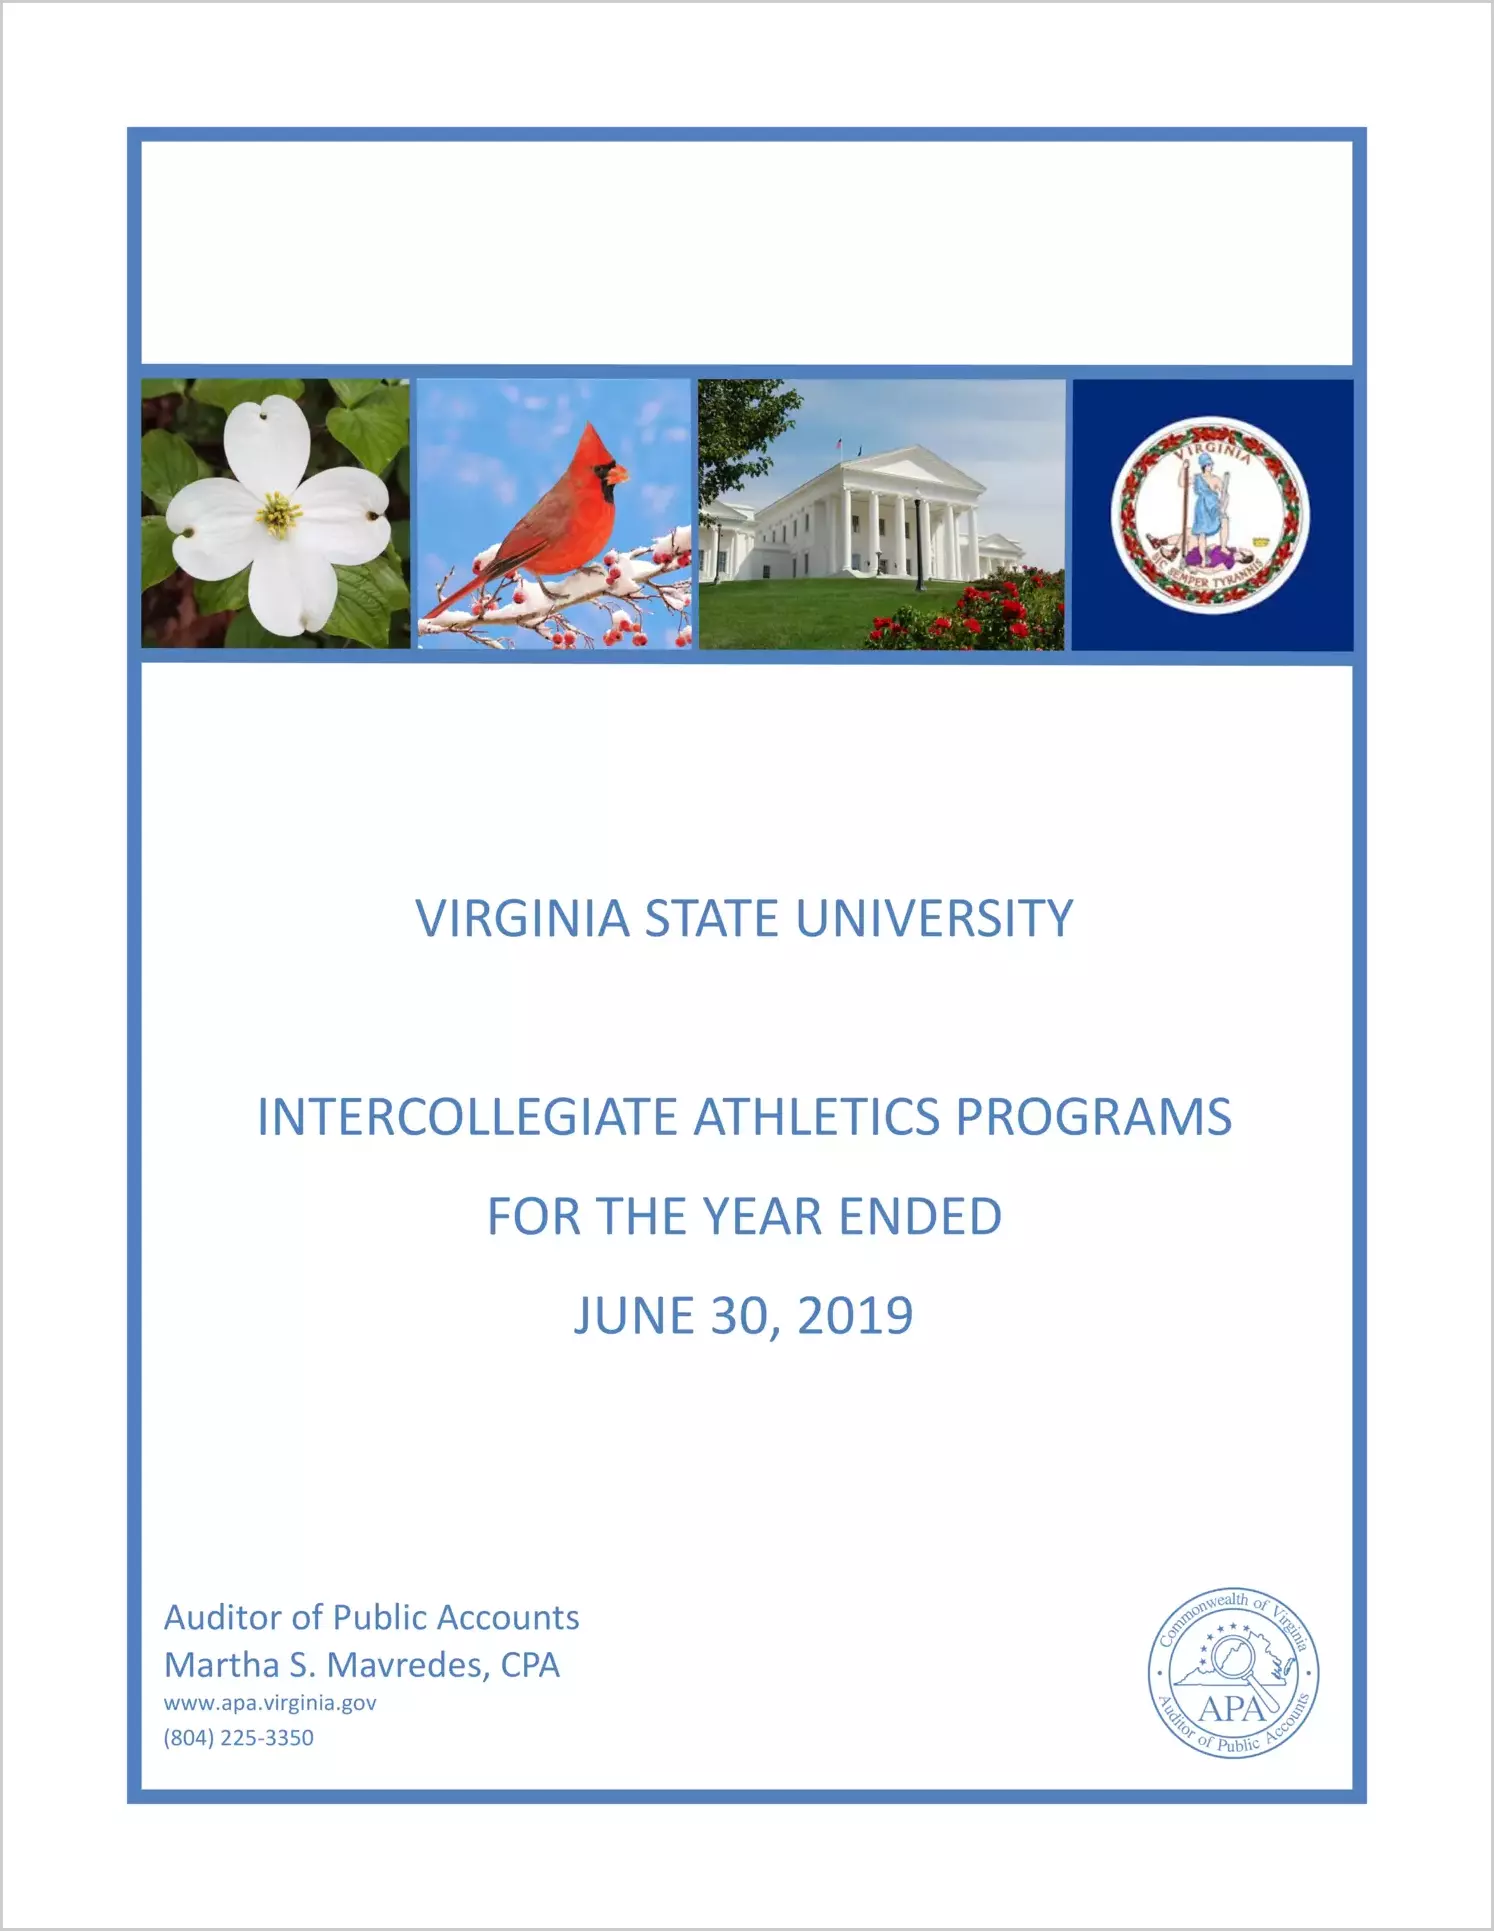 Virginia State University Intercollegiate Athletics Programs for the year ended June 30, 2019